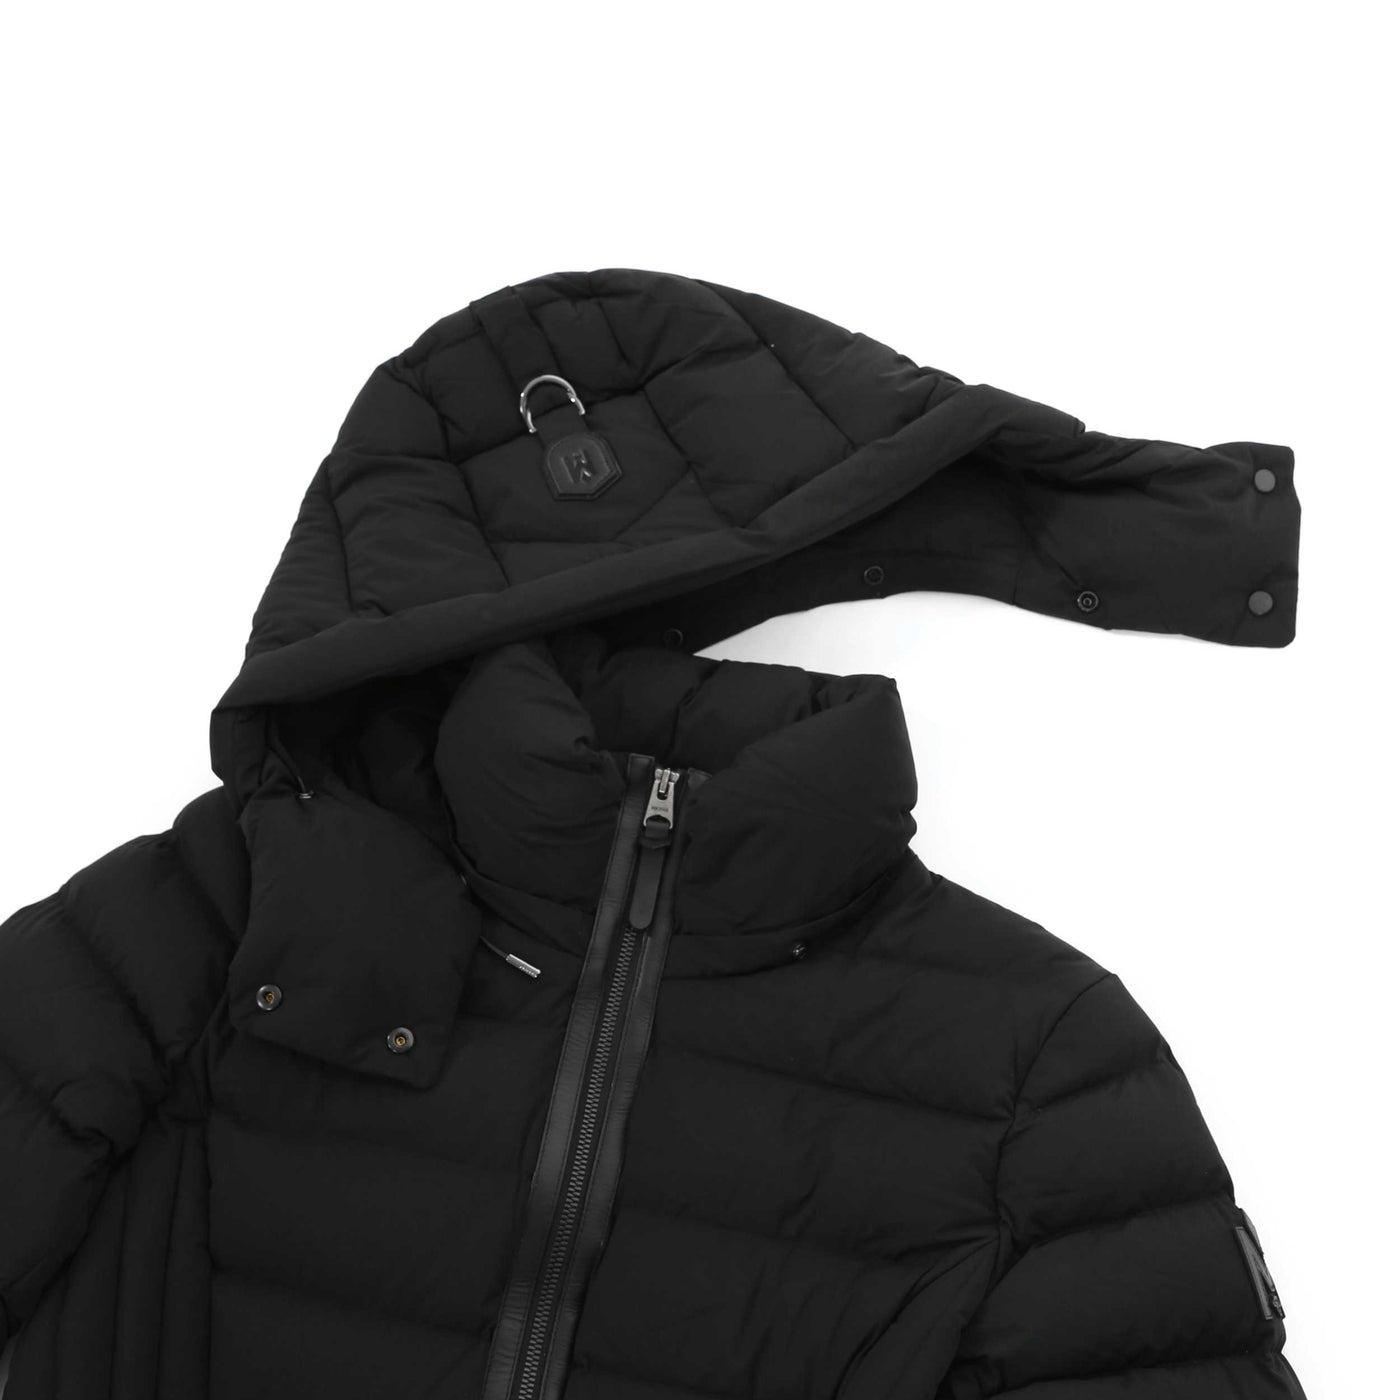 Mackage Farren Ladies Jacket in Black Detachable Hood